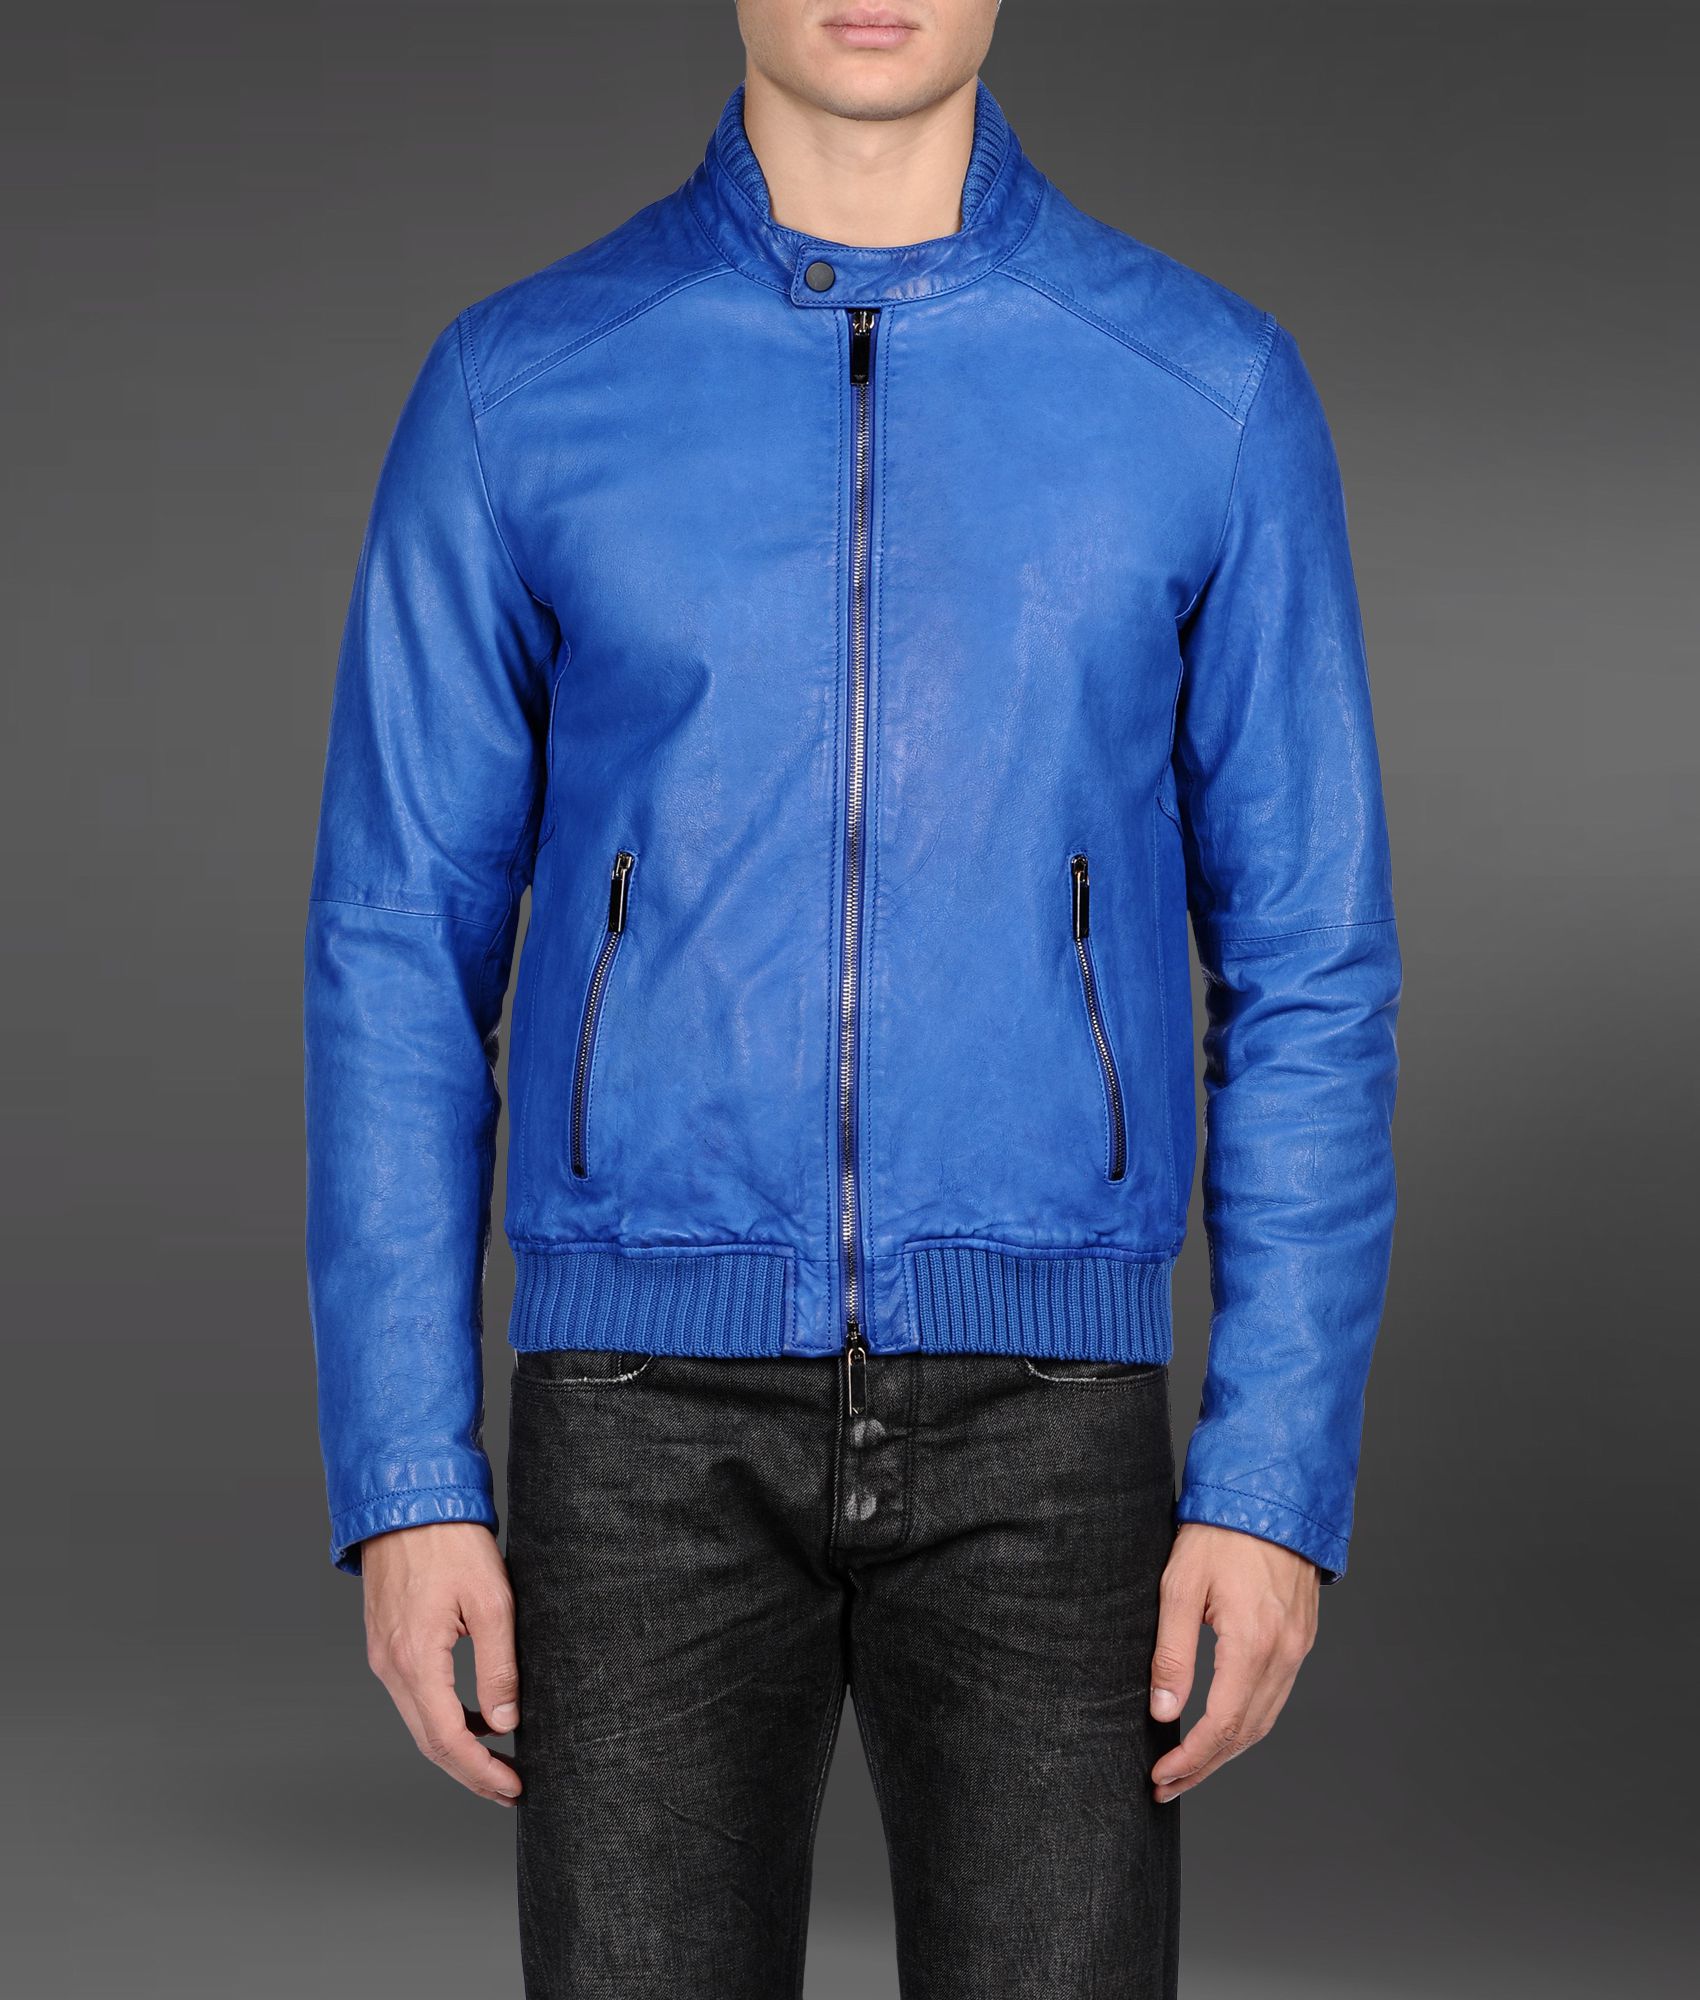 Armani Blue Leather Jacket Spain, SAVE 36% - icarus.photos